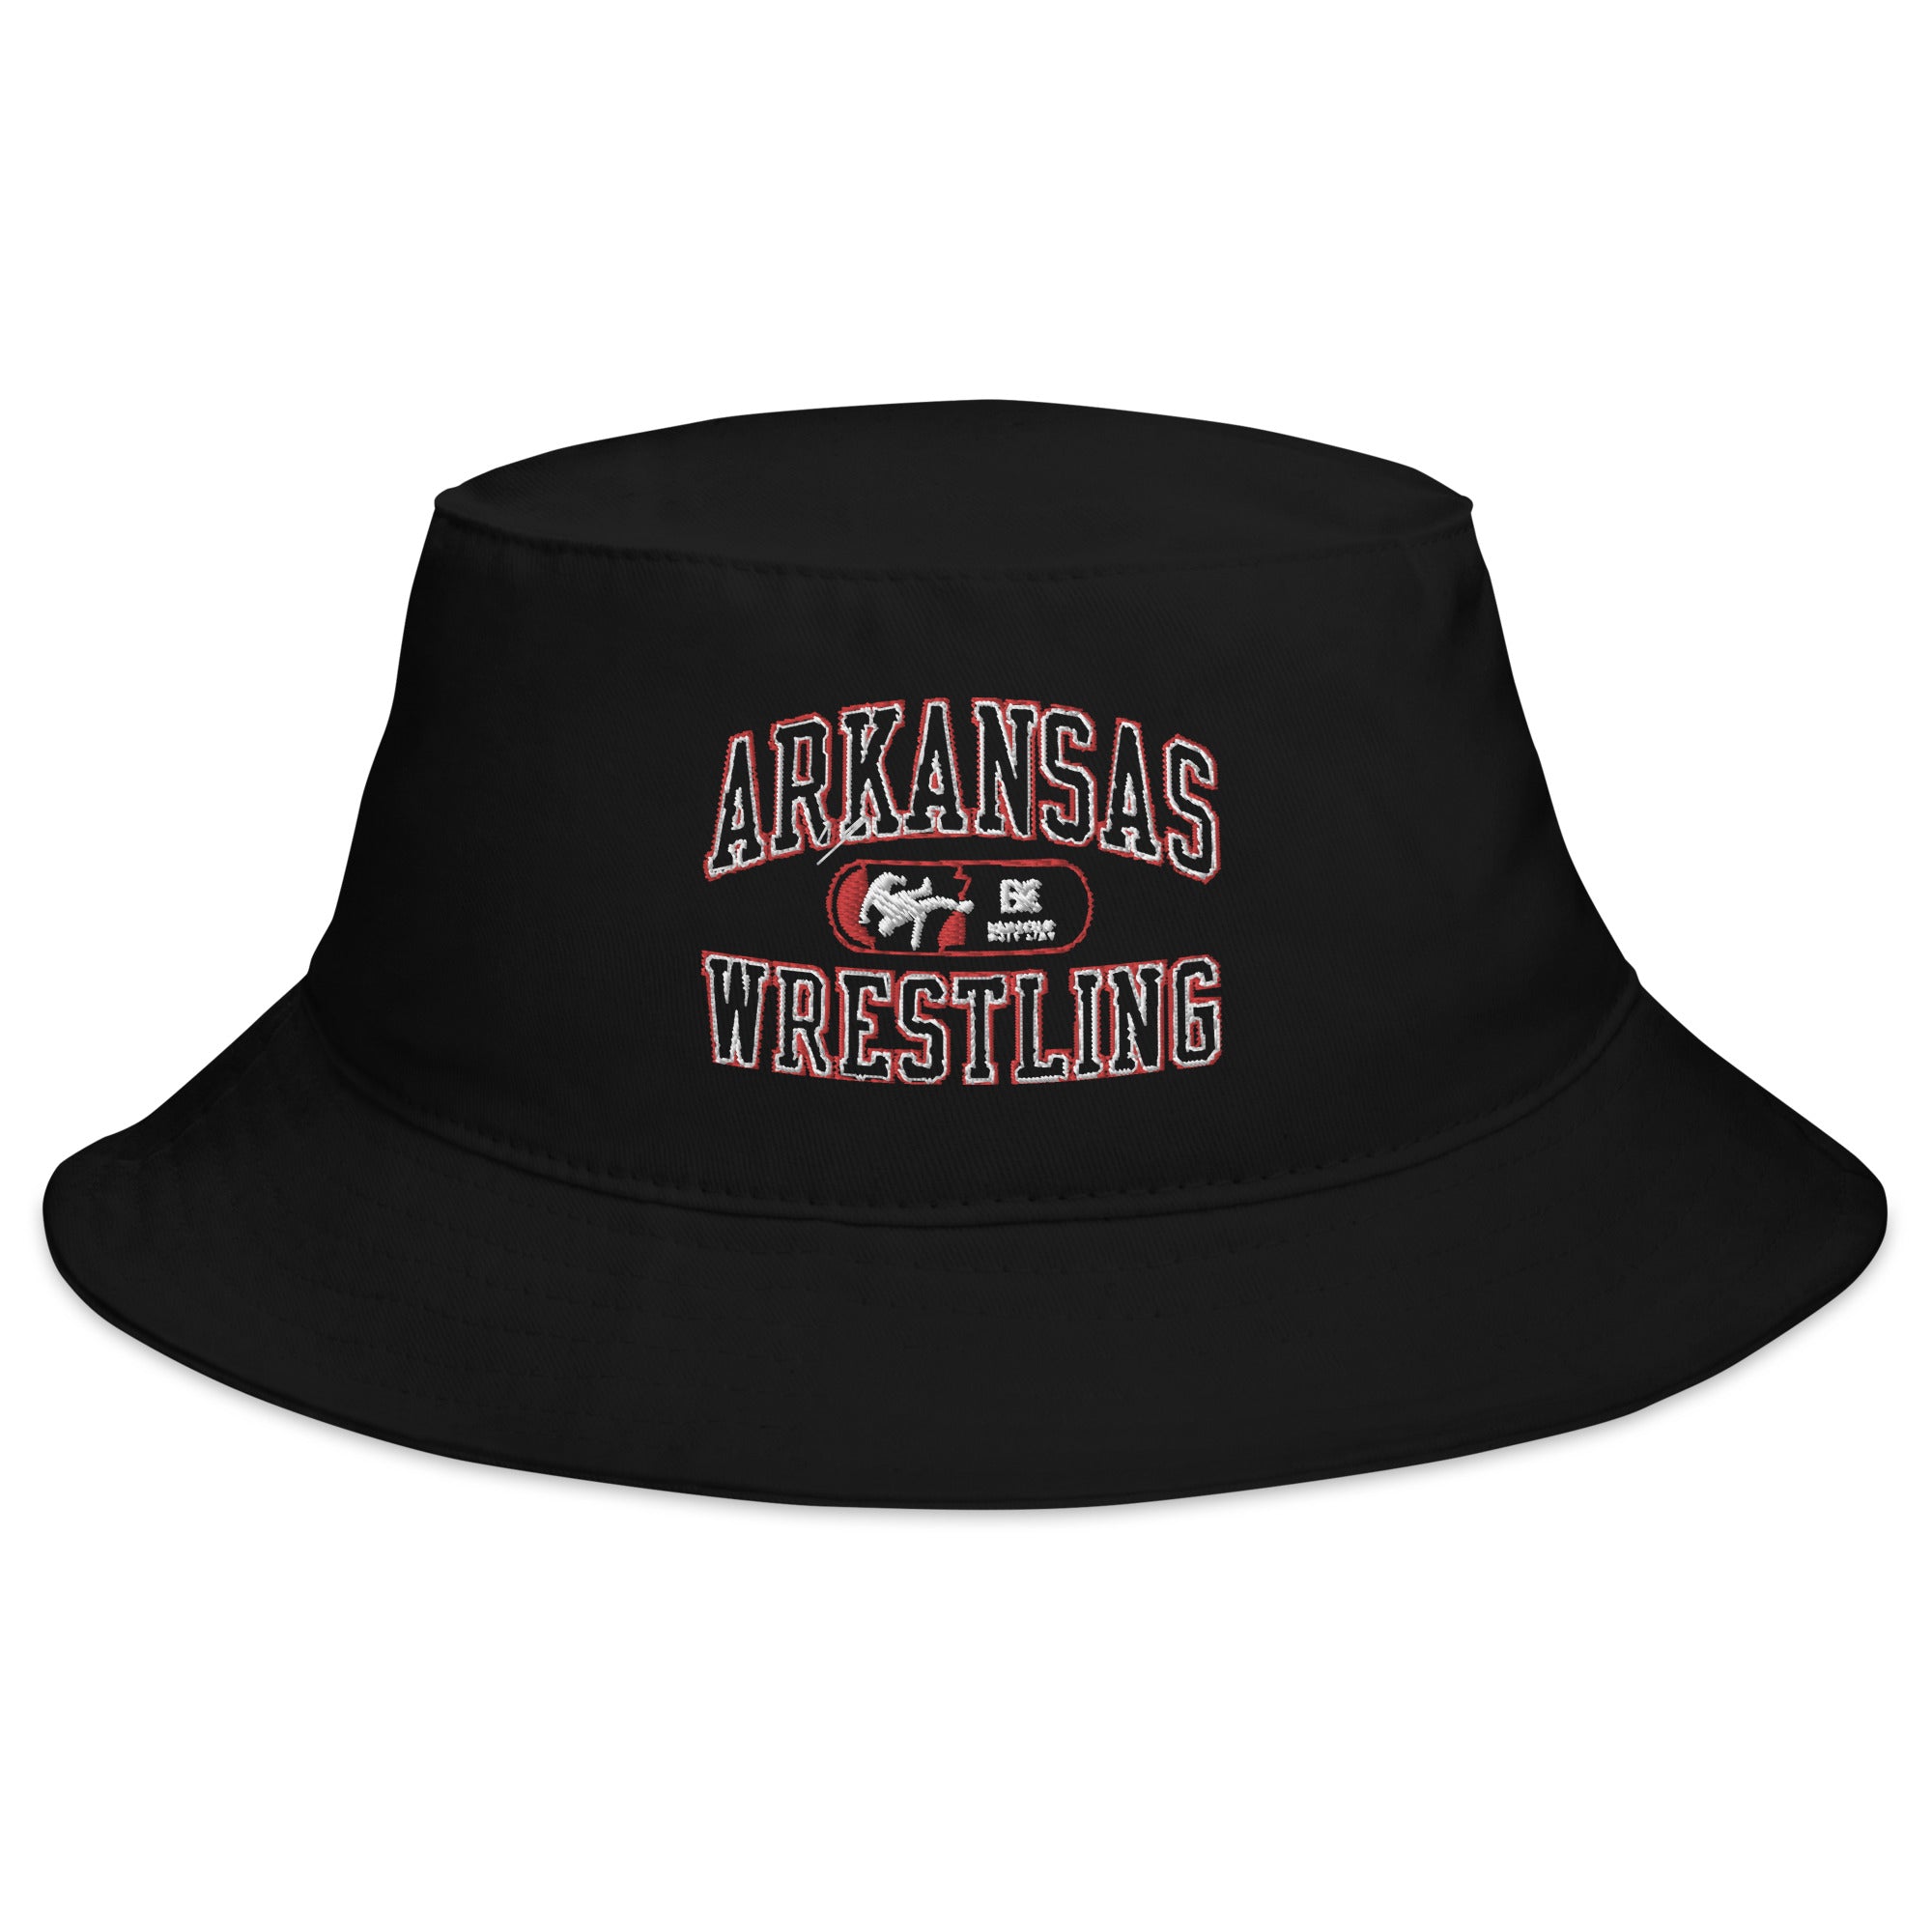 Arkansas Coaches Clinic Bucket Hat